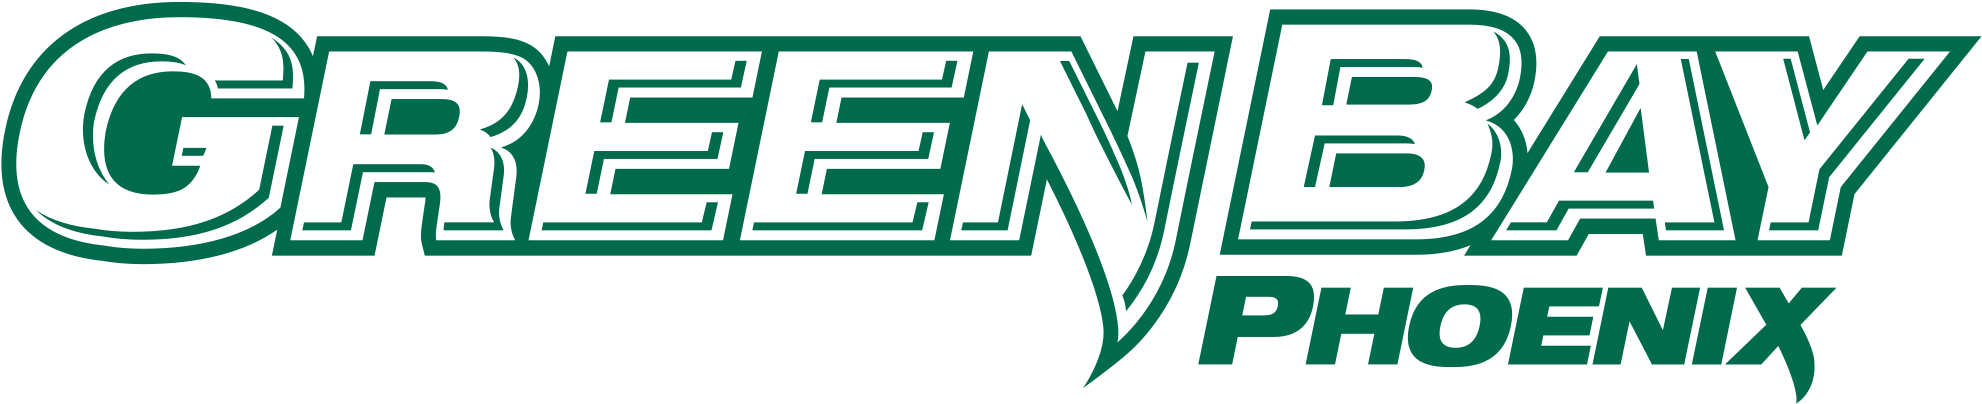 Open - Green Bay Phoenix Basketball Logo (2000x423), Png Download